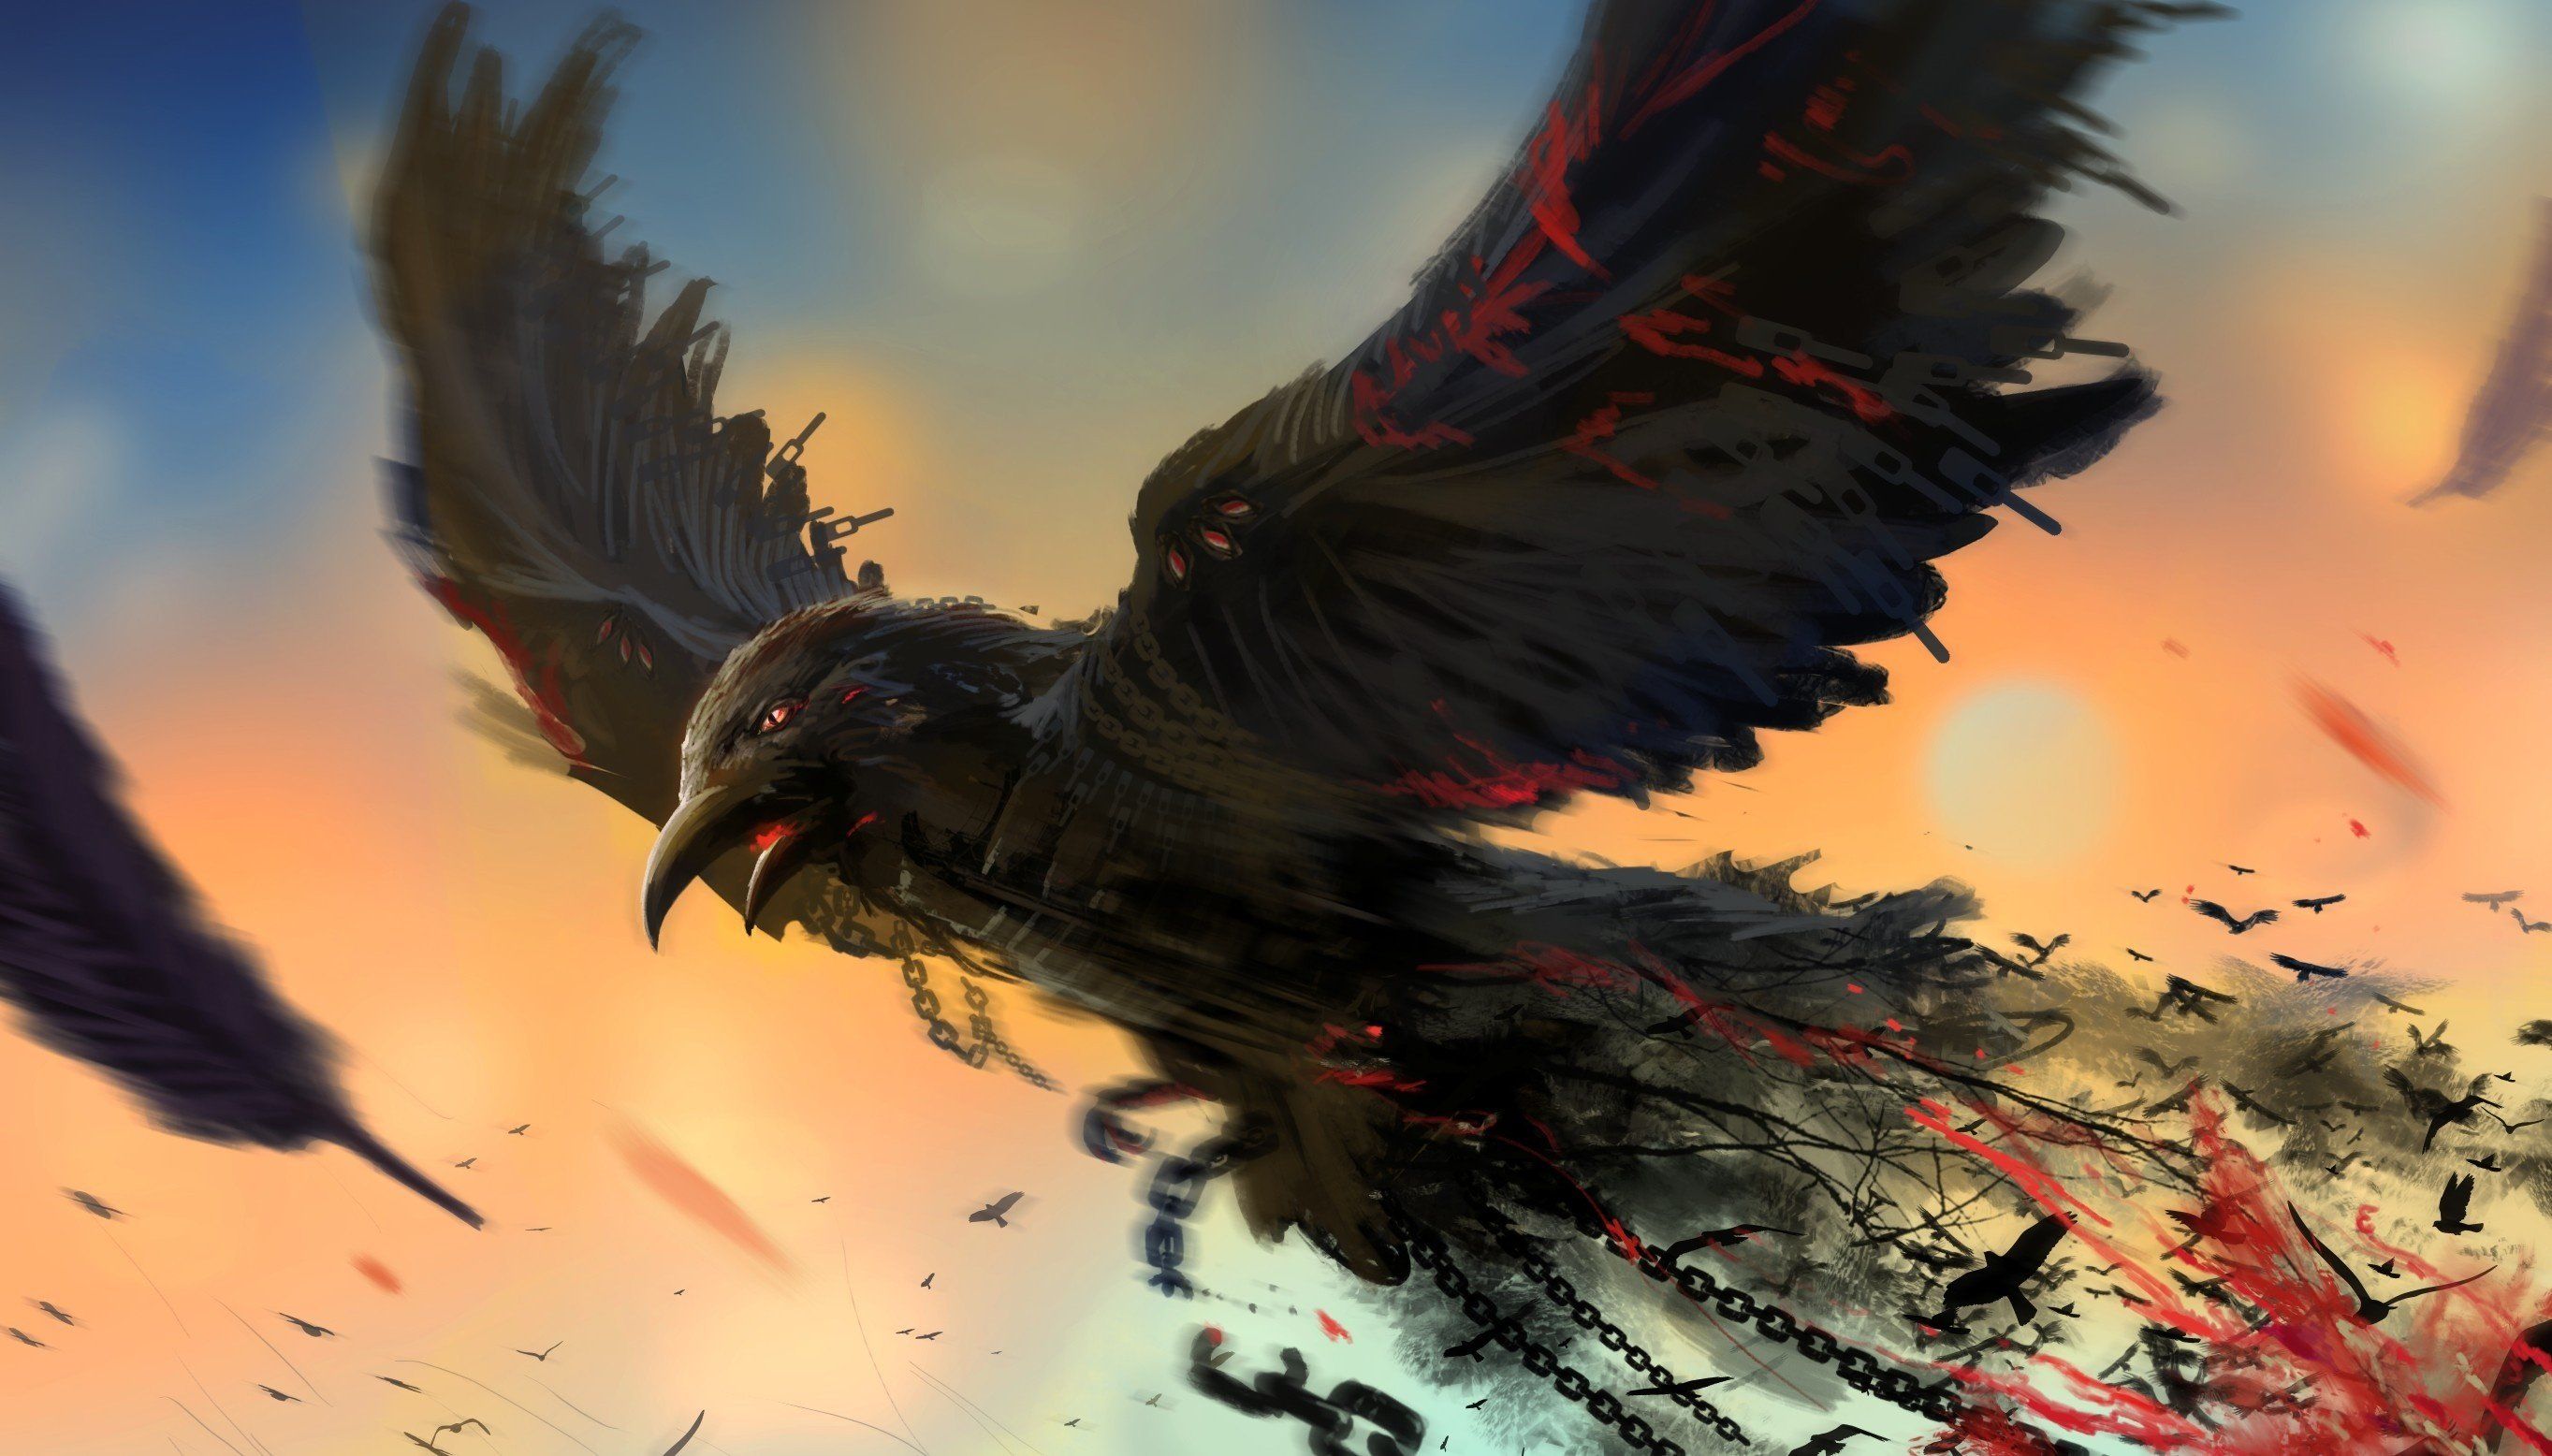 Best 500+ Raven Pictures [HD] | Download Free Images on Unsplash